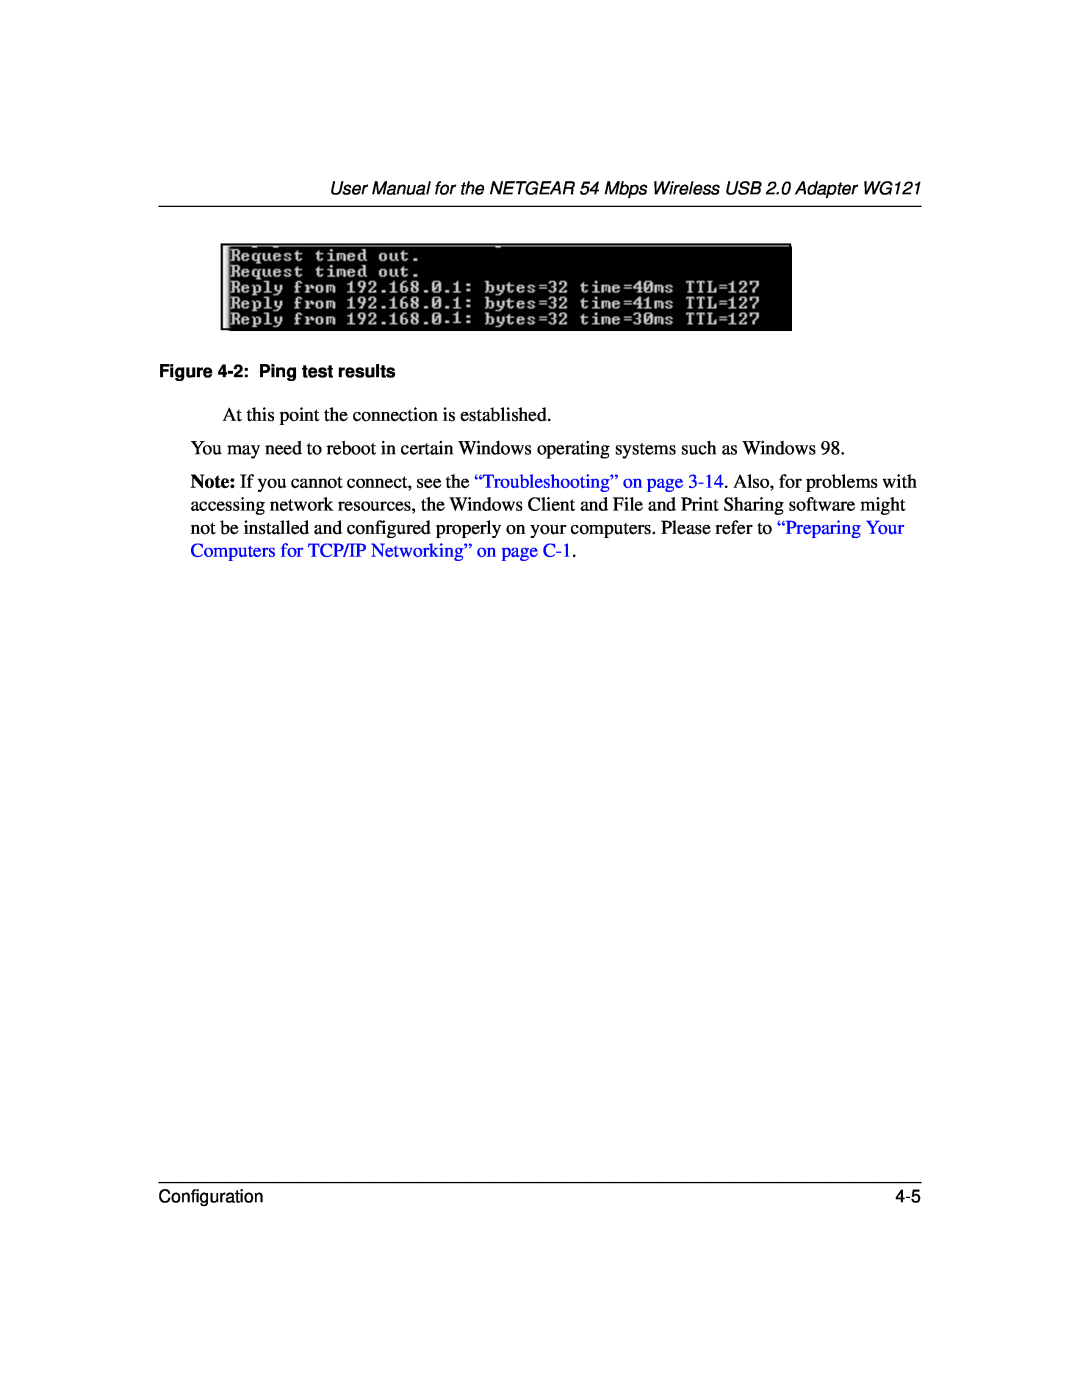 NETGEAR WG121 user manual 2 Ping test results 